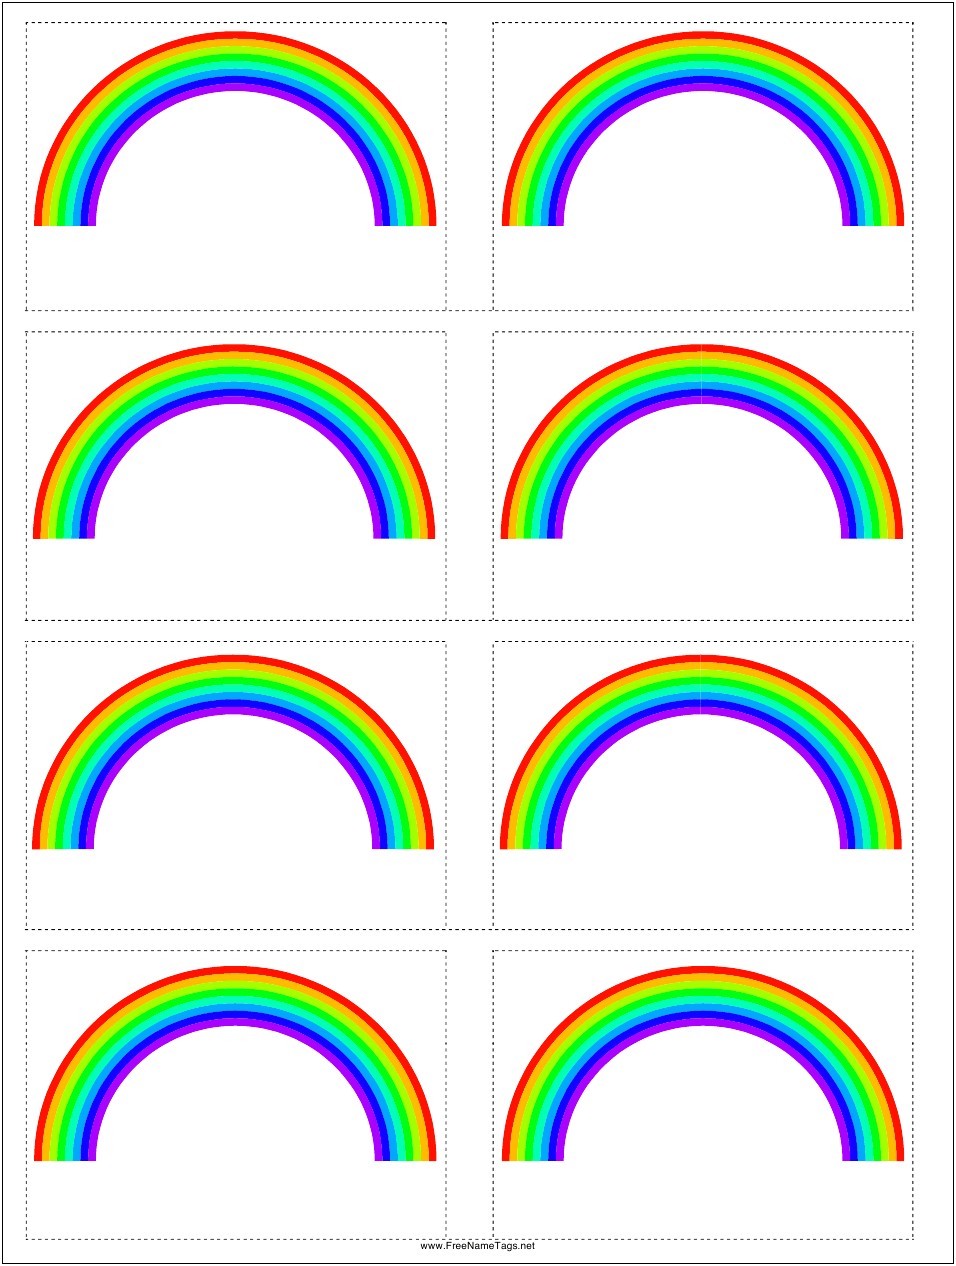 Free Printable Rainbow Name Plate Label Templates